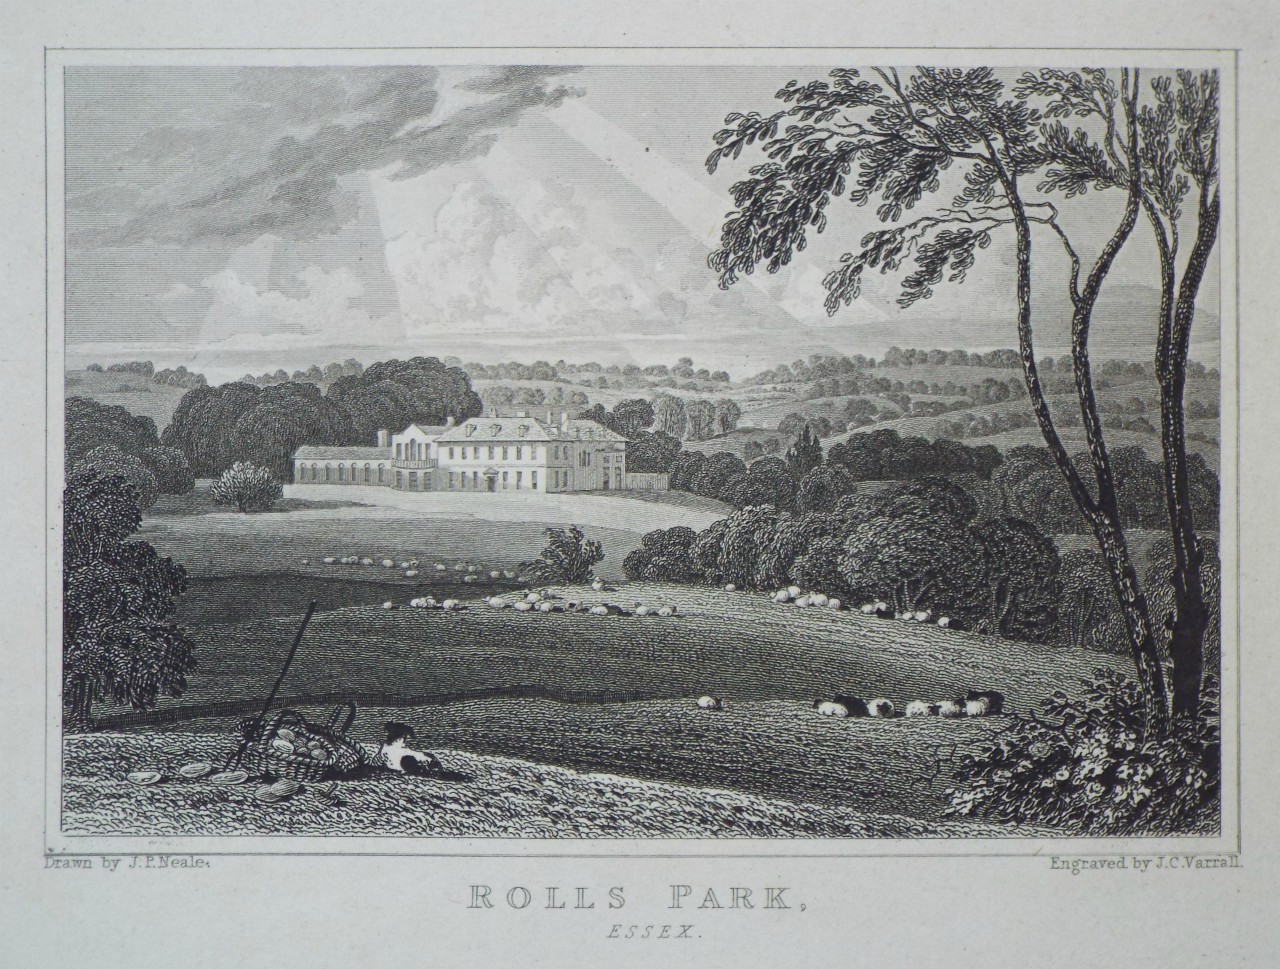 Print - Rolls Park, Essex. - Varrall